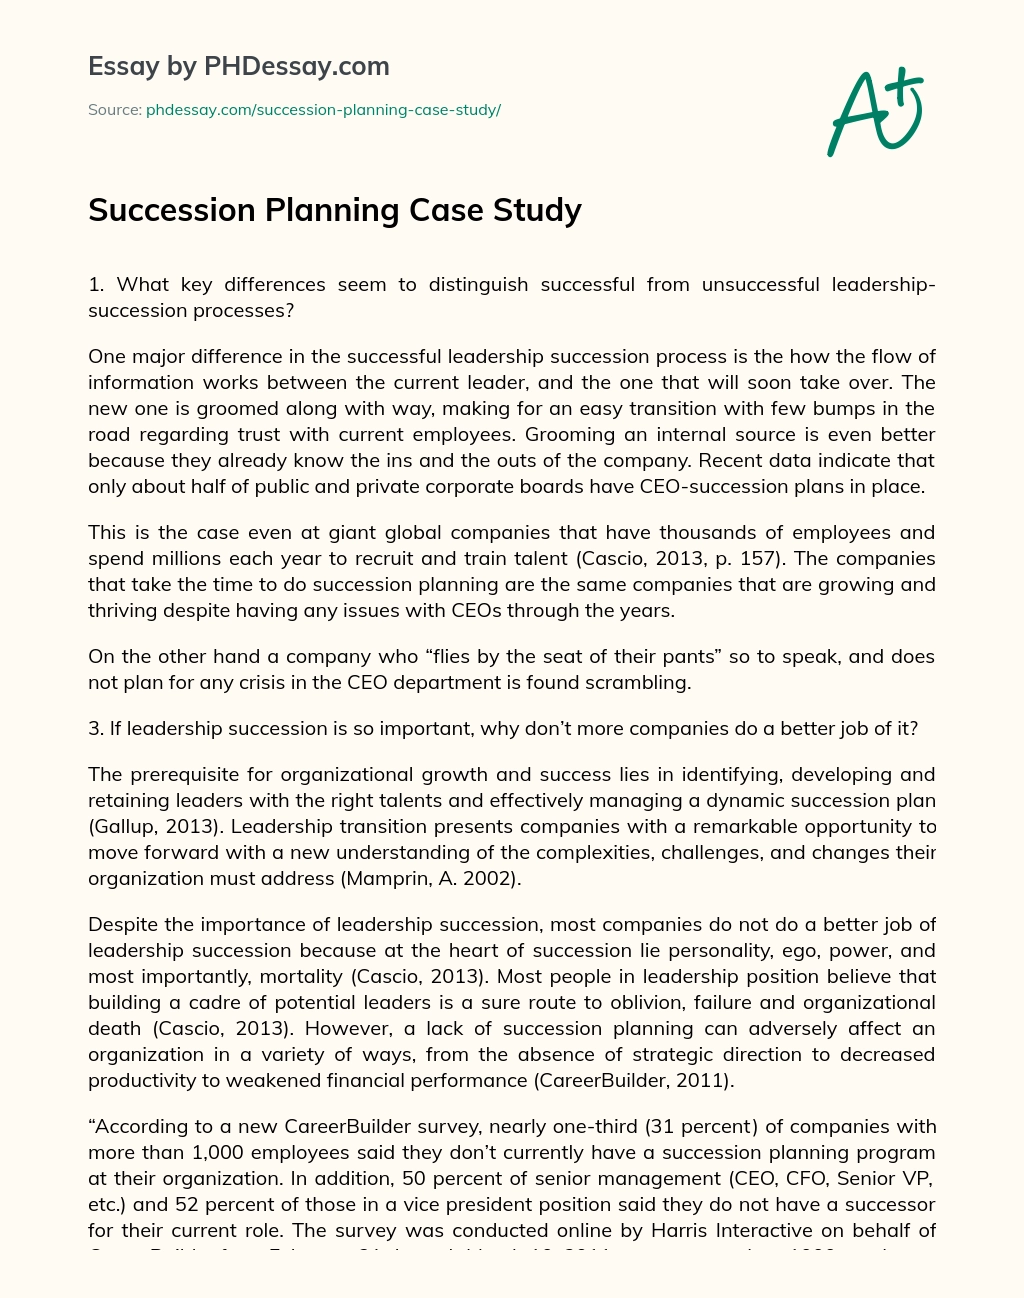 Succession Planning Case Study essay